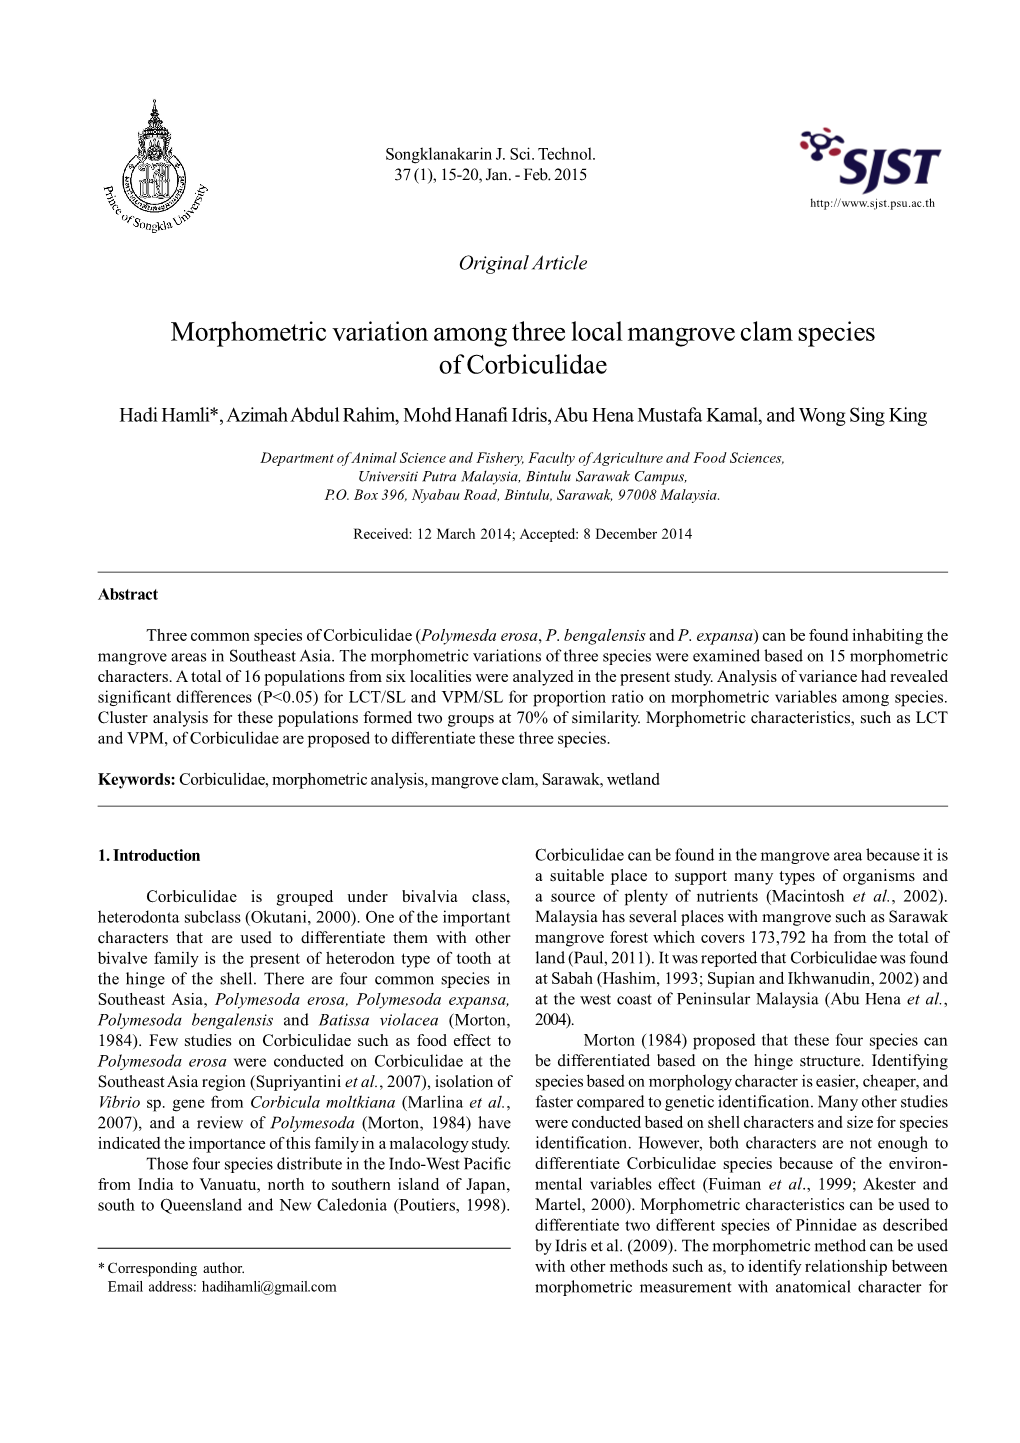 Morphometric Variation Among Three Local Mangrove Clam Species of Corbiculidae